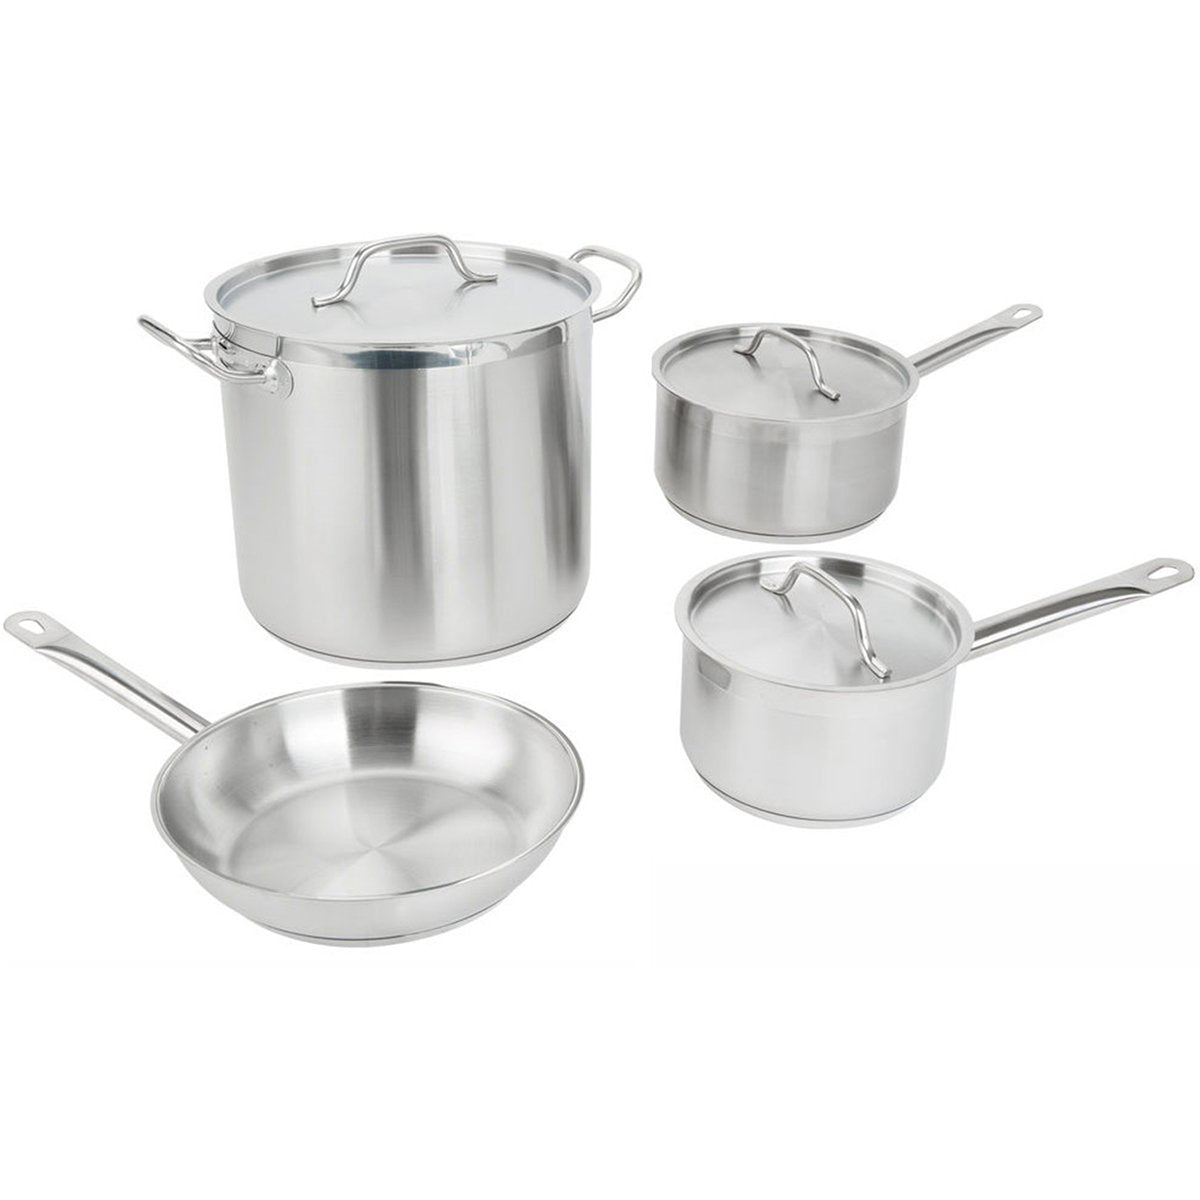 Set of Stainless steel Cookware 7 pcs Sauce pans Stew pan Fry pan Rental